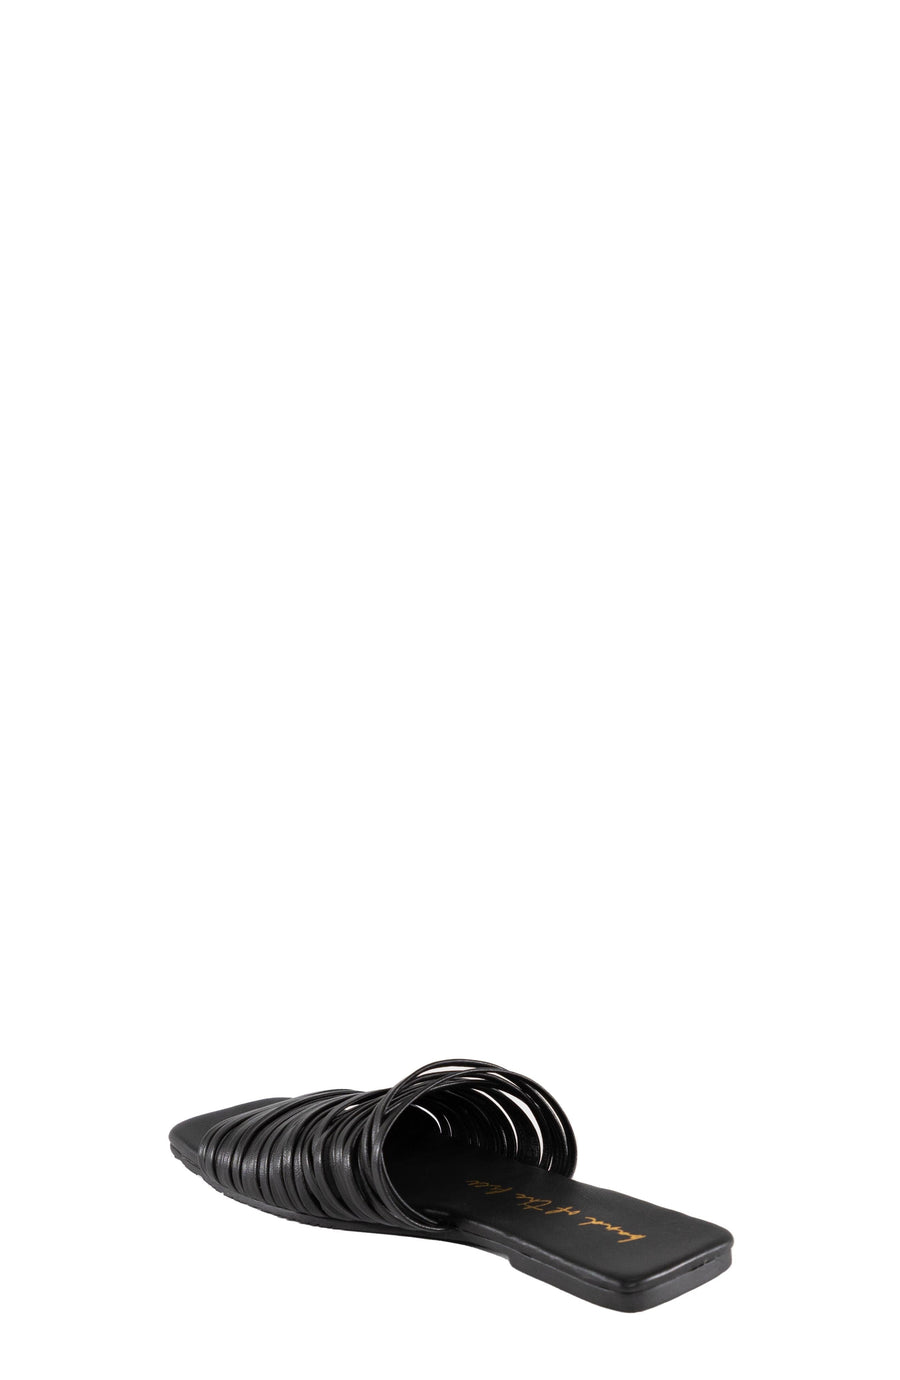 Lyra Black Leather Strappy Slide Sandal